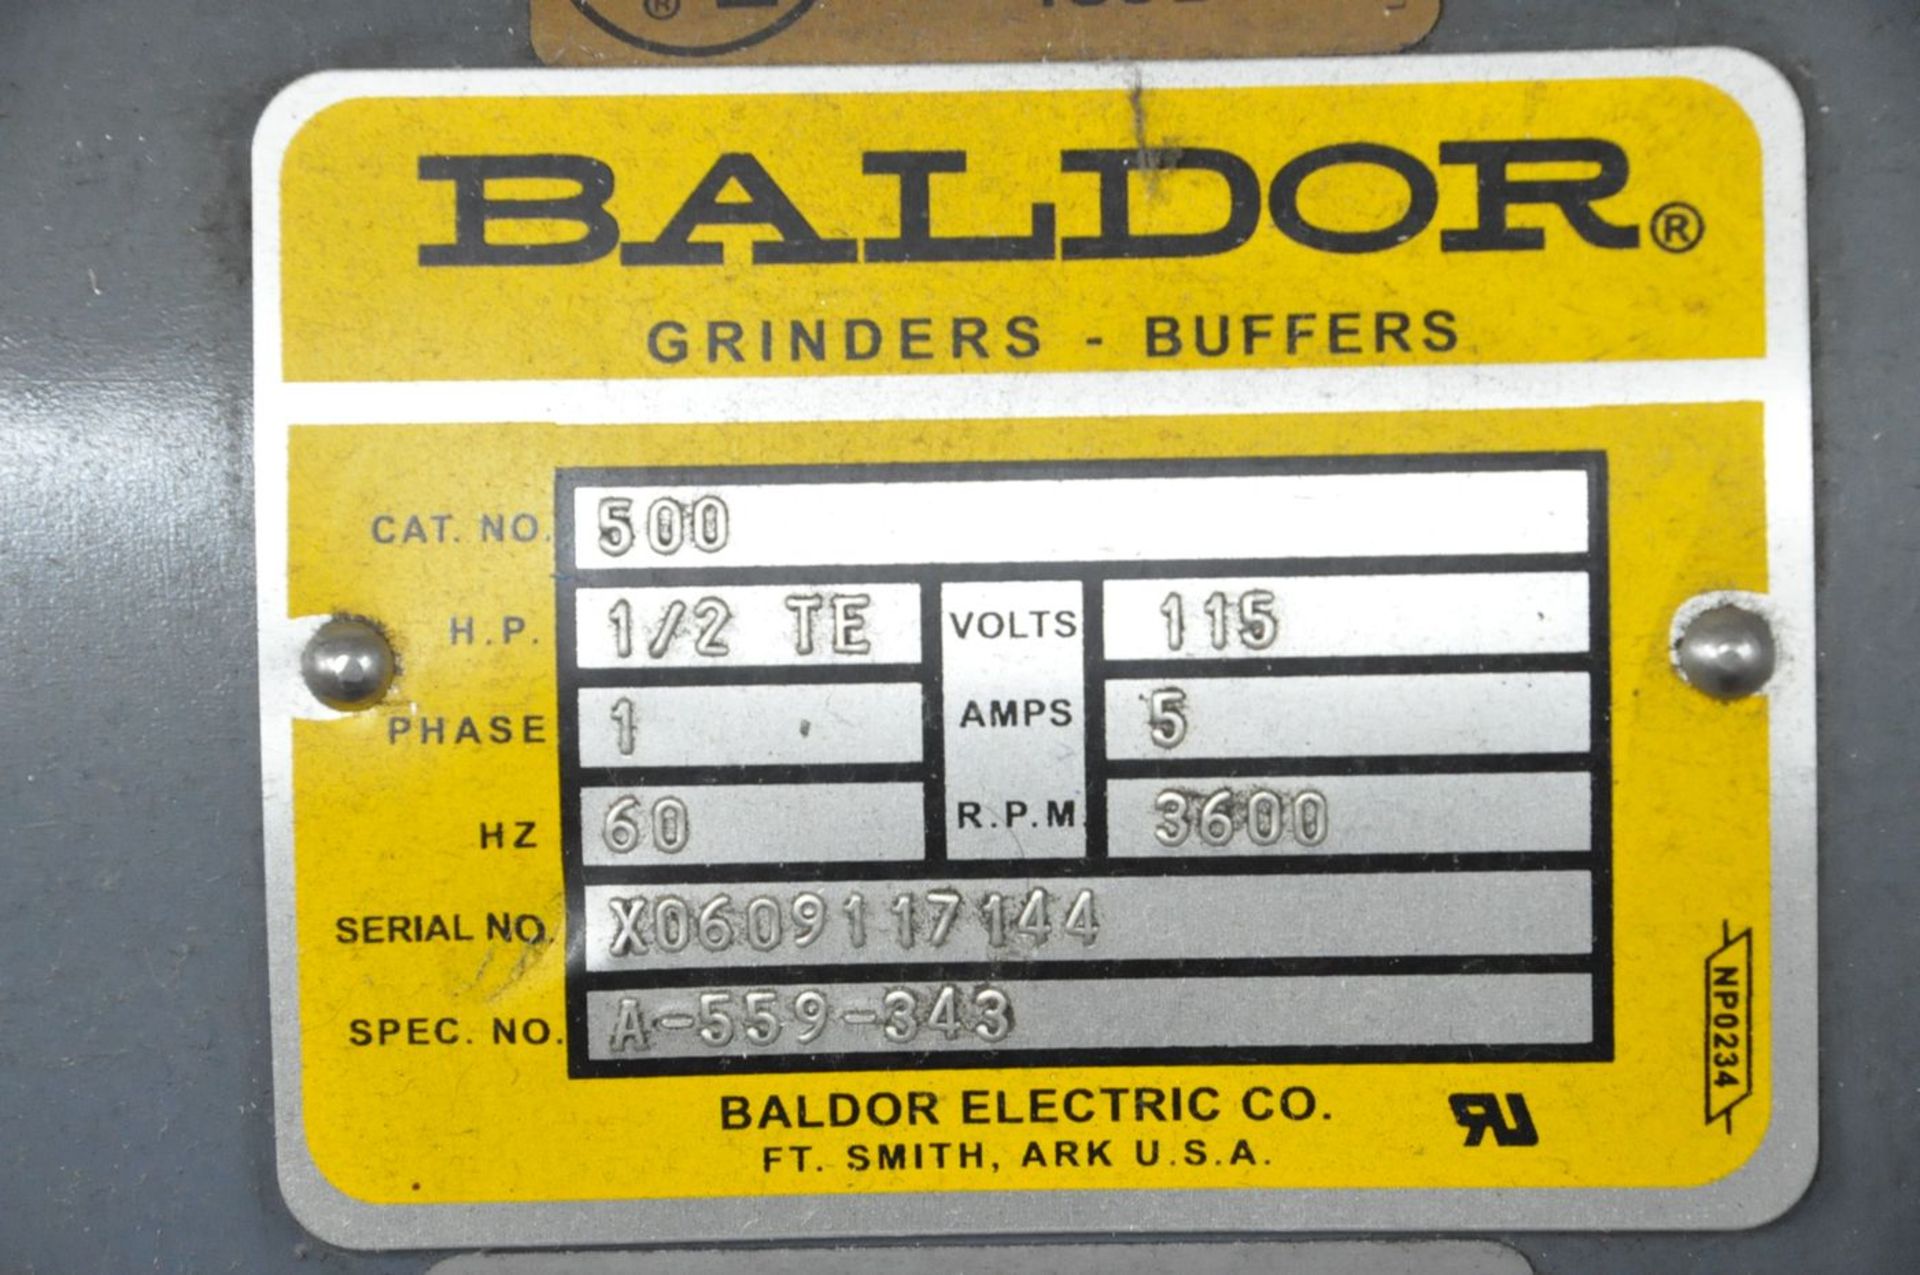 Baldor Cat No 500 6" X 1/2-HP Double End Pedestal Type Grinder, S/N X0609117144, 3,600-RPM, 1-PH, - Image 2 of 2